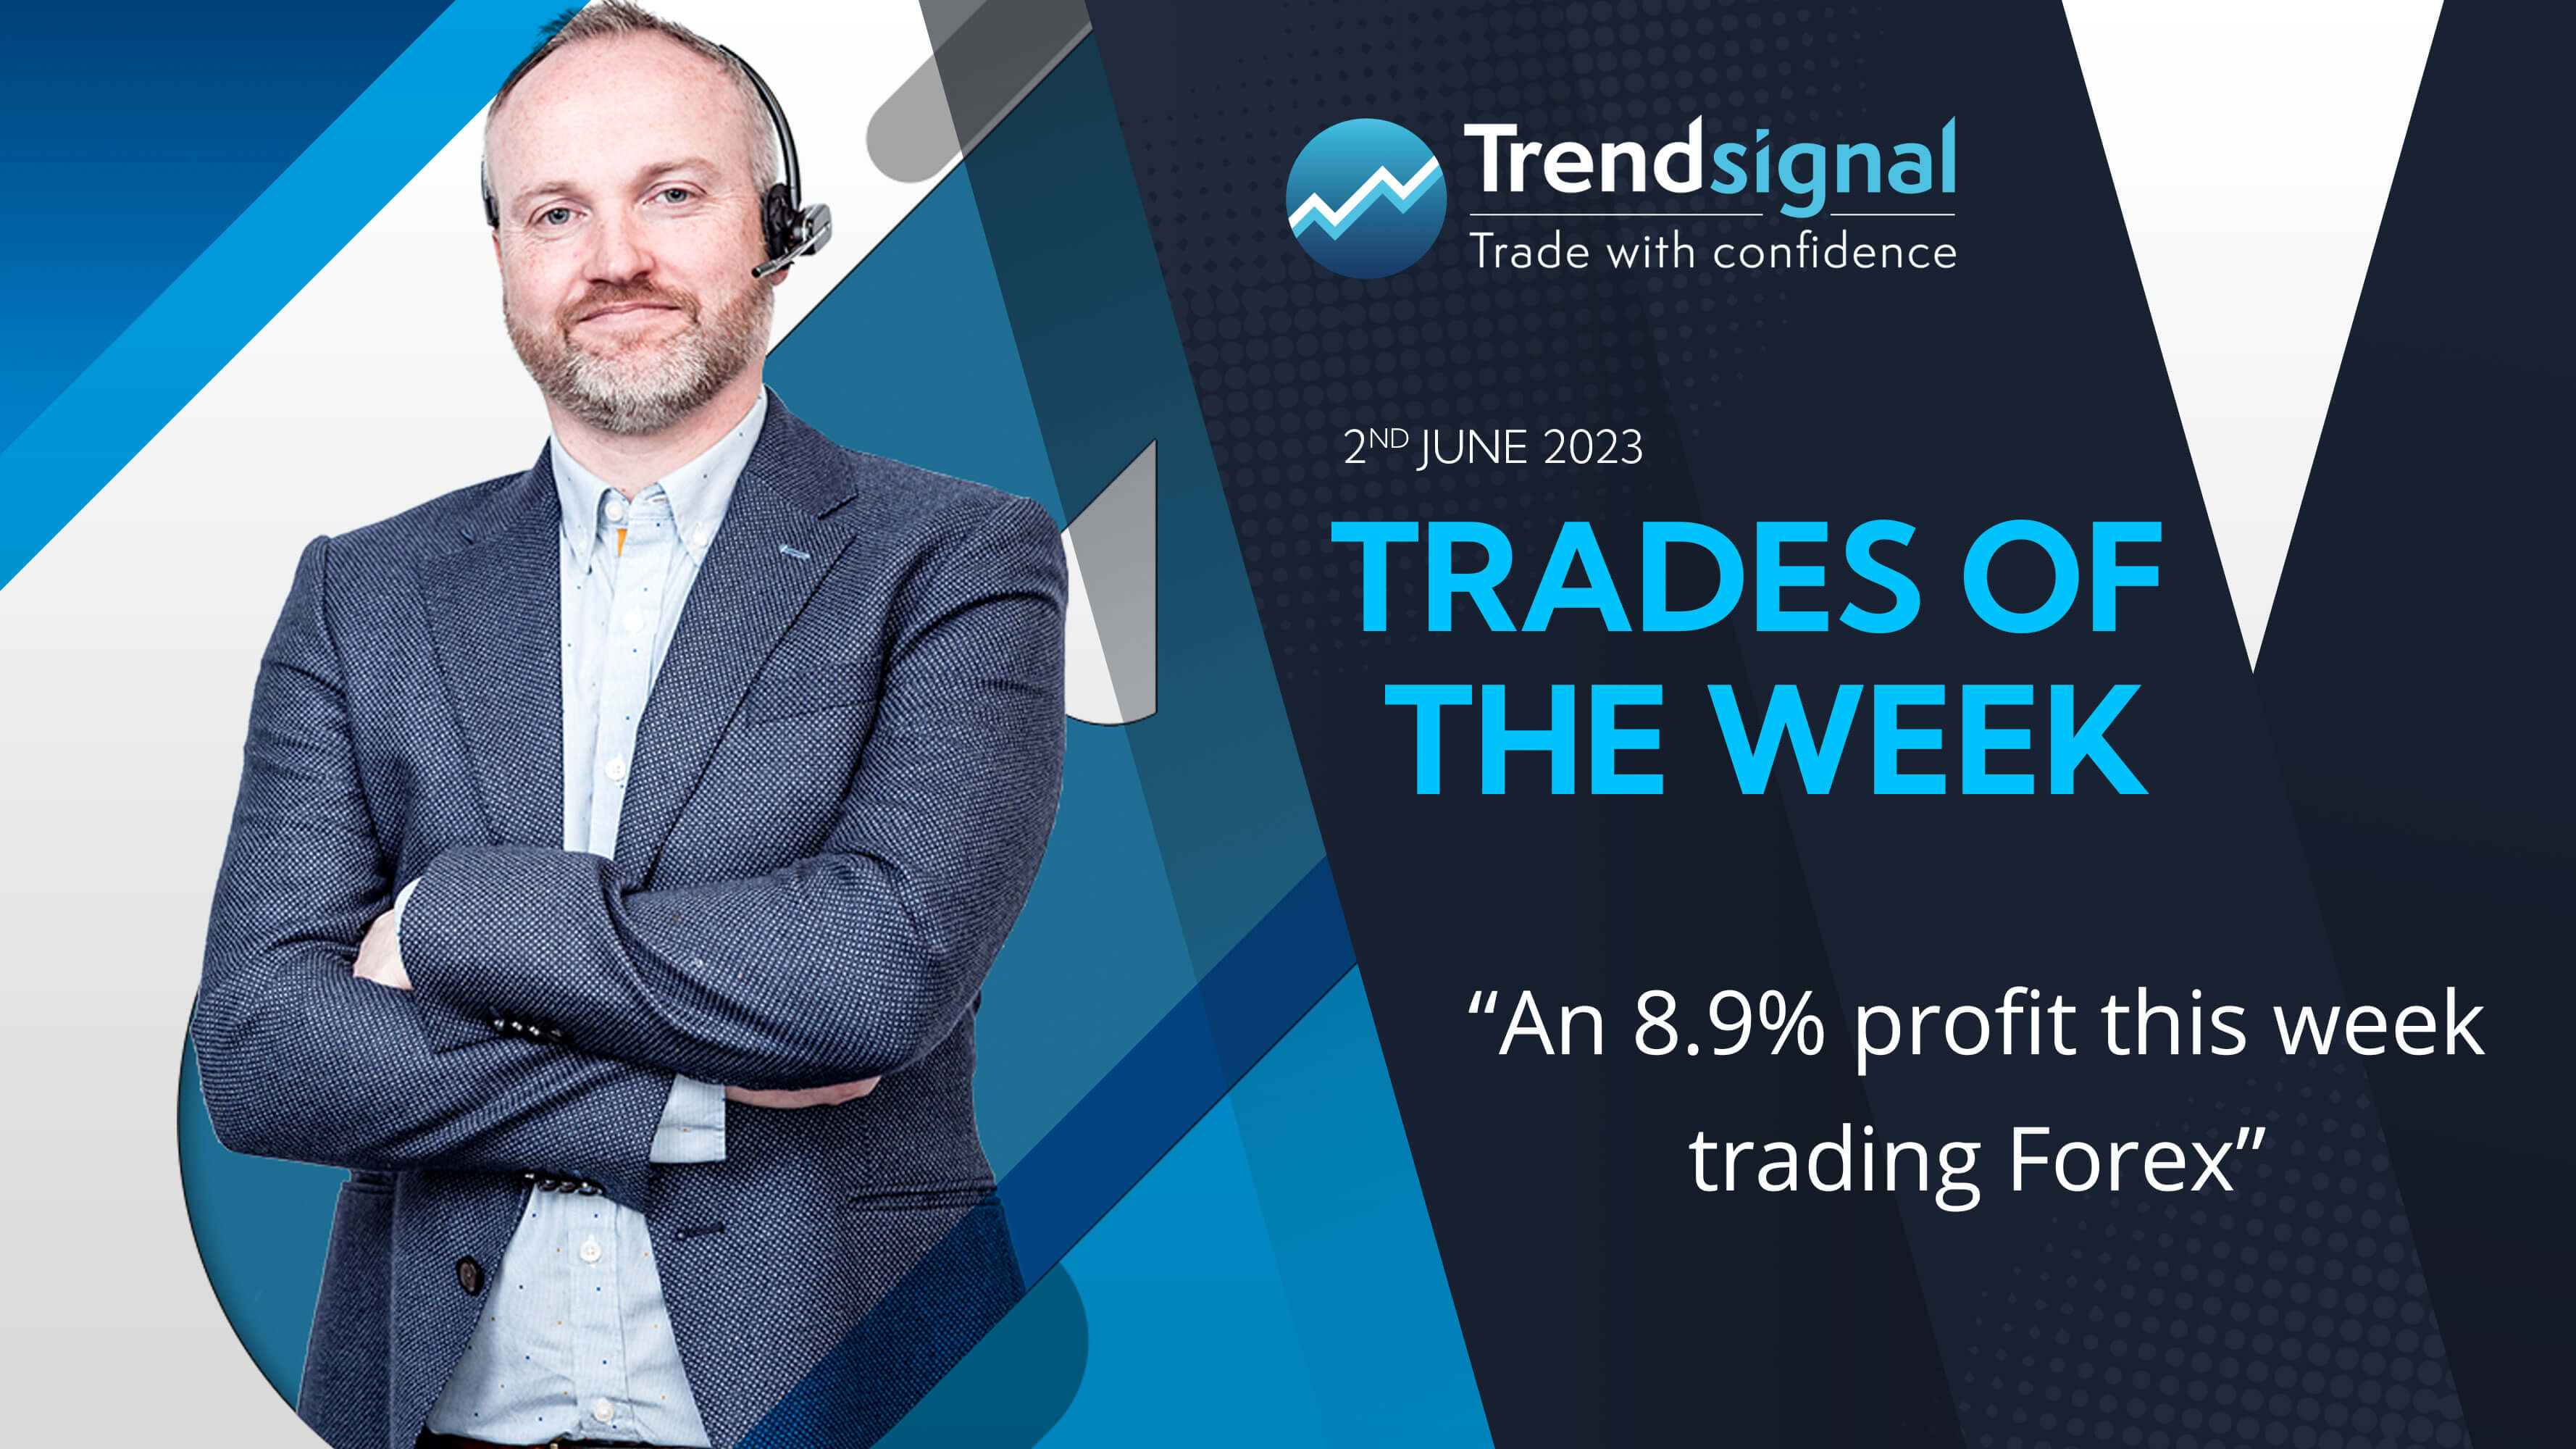 An 8.9% profit this week trading Forex